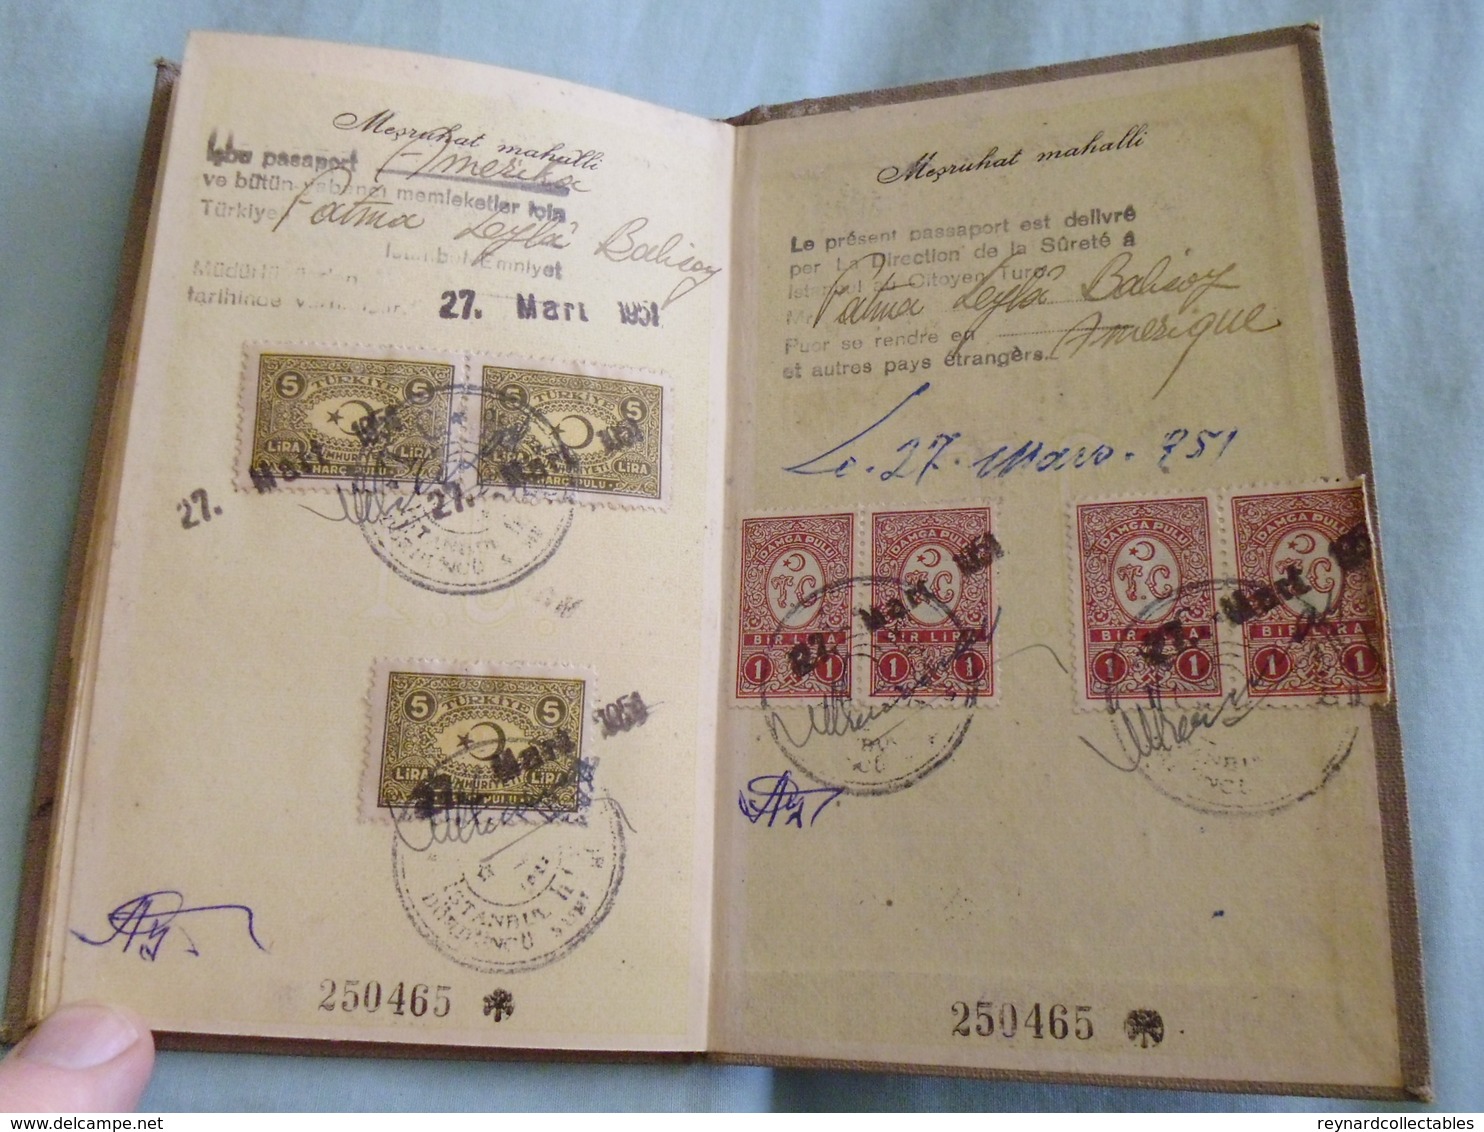 1951 Turkey Reisepass Passport Istanbul. Swiss, German, Greek(!) handstamps. Fiscals.